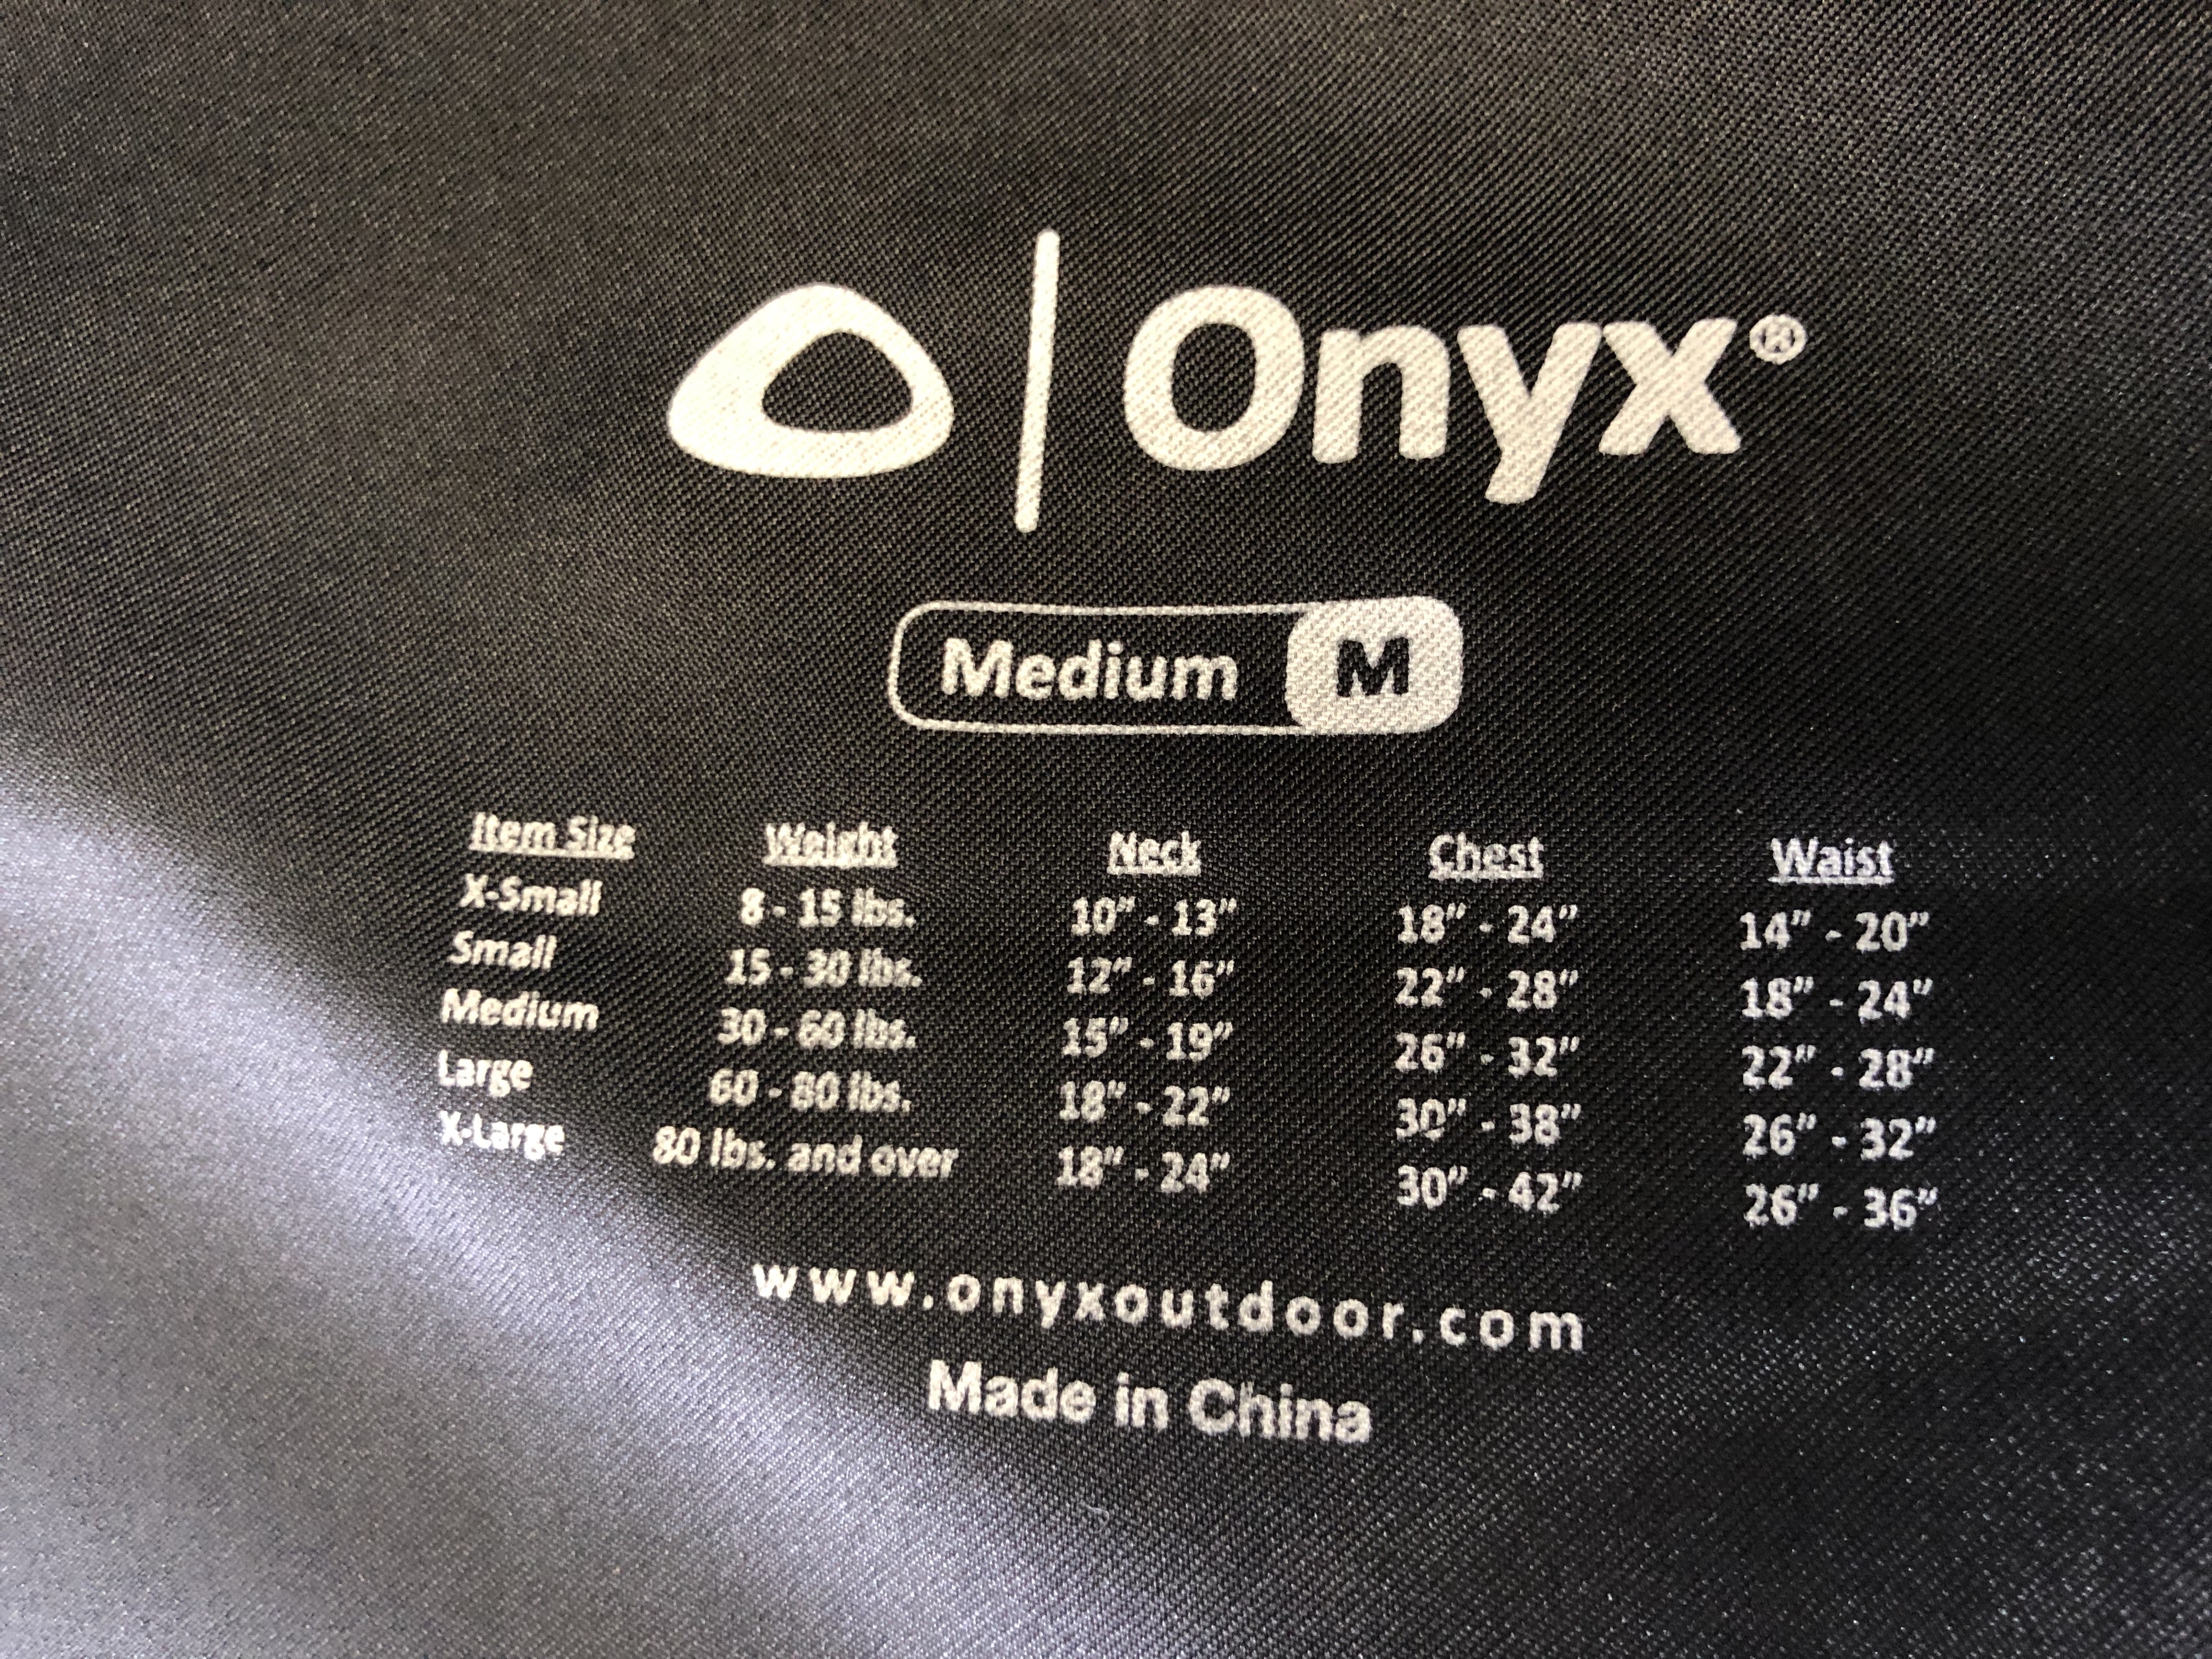 onyx life vest company information